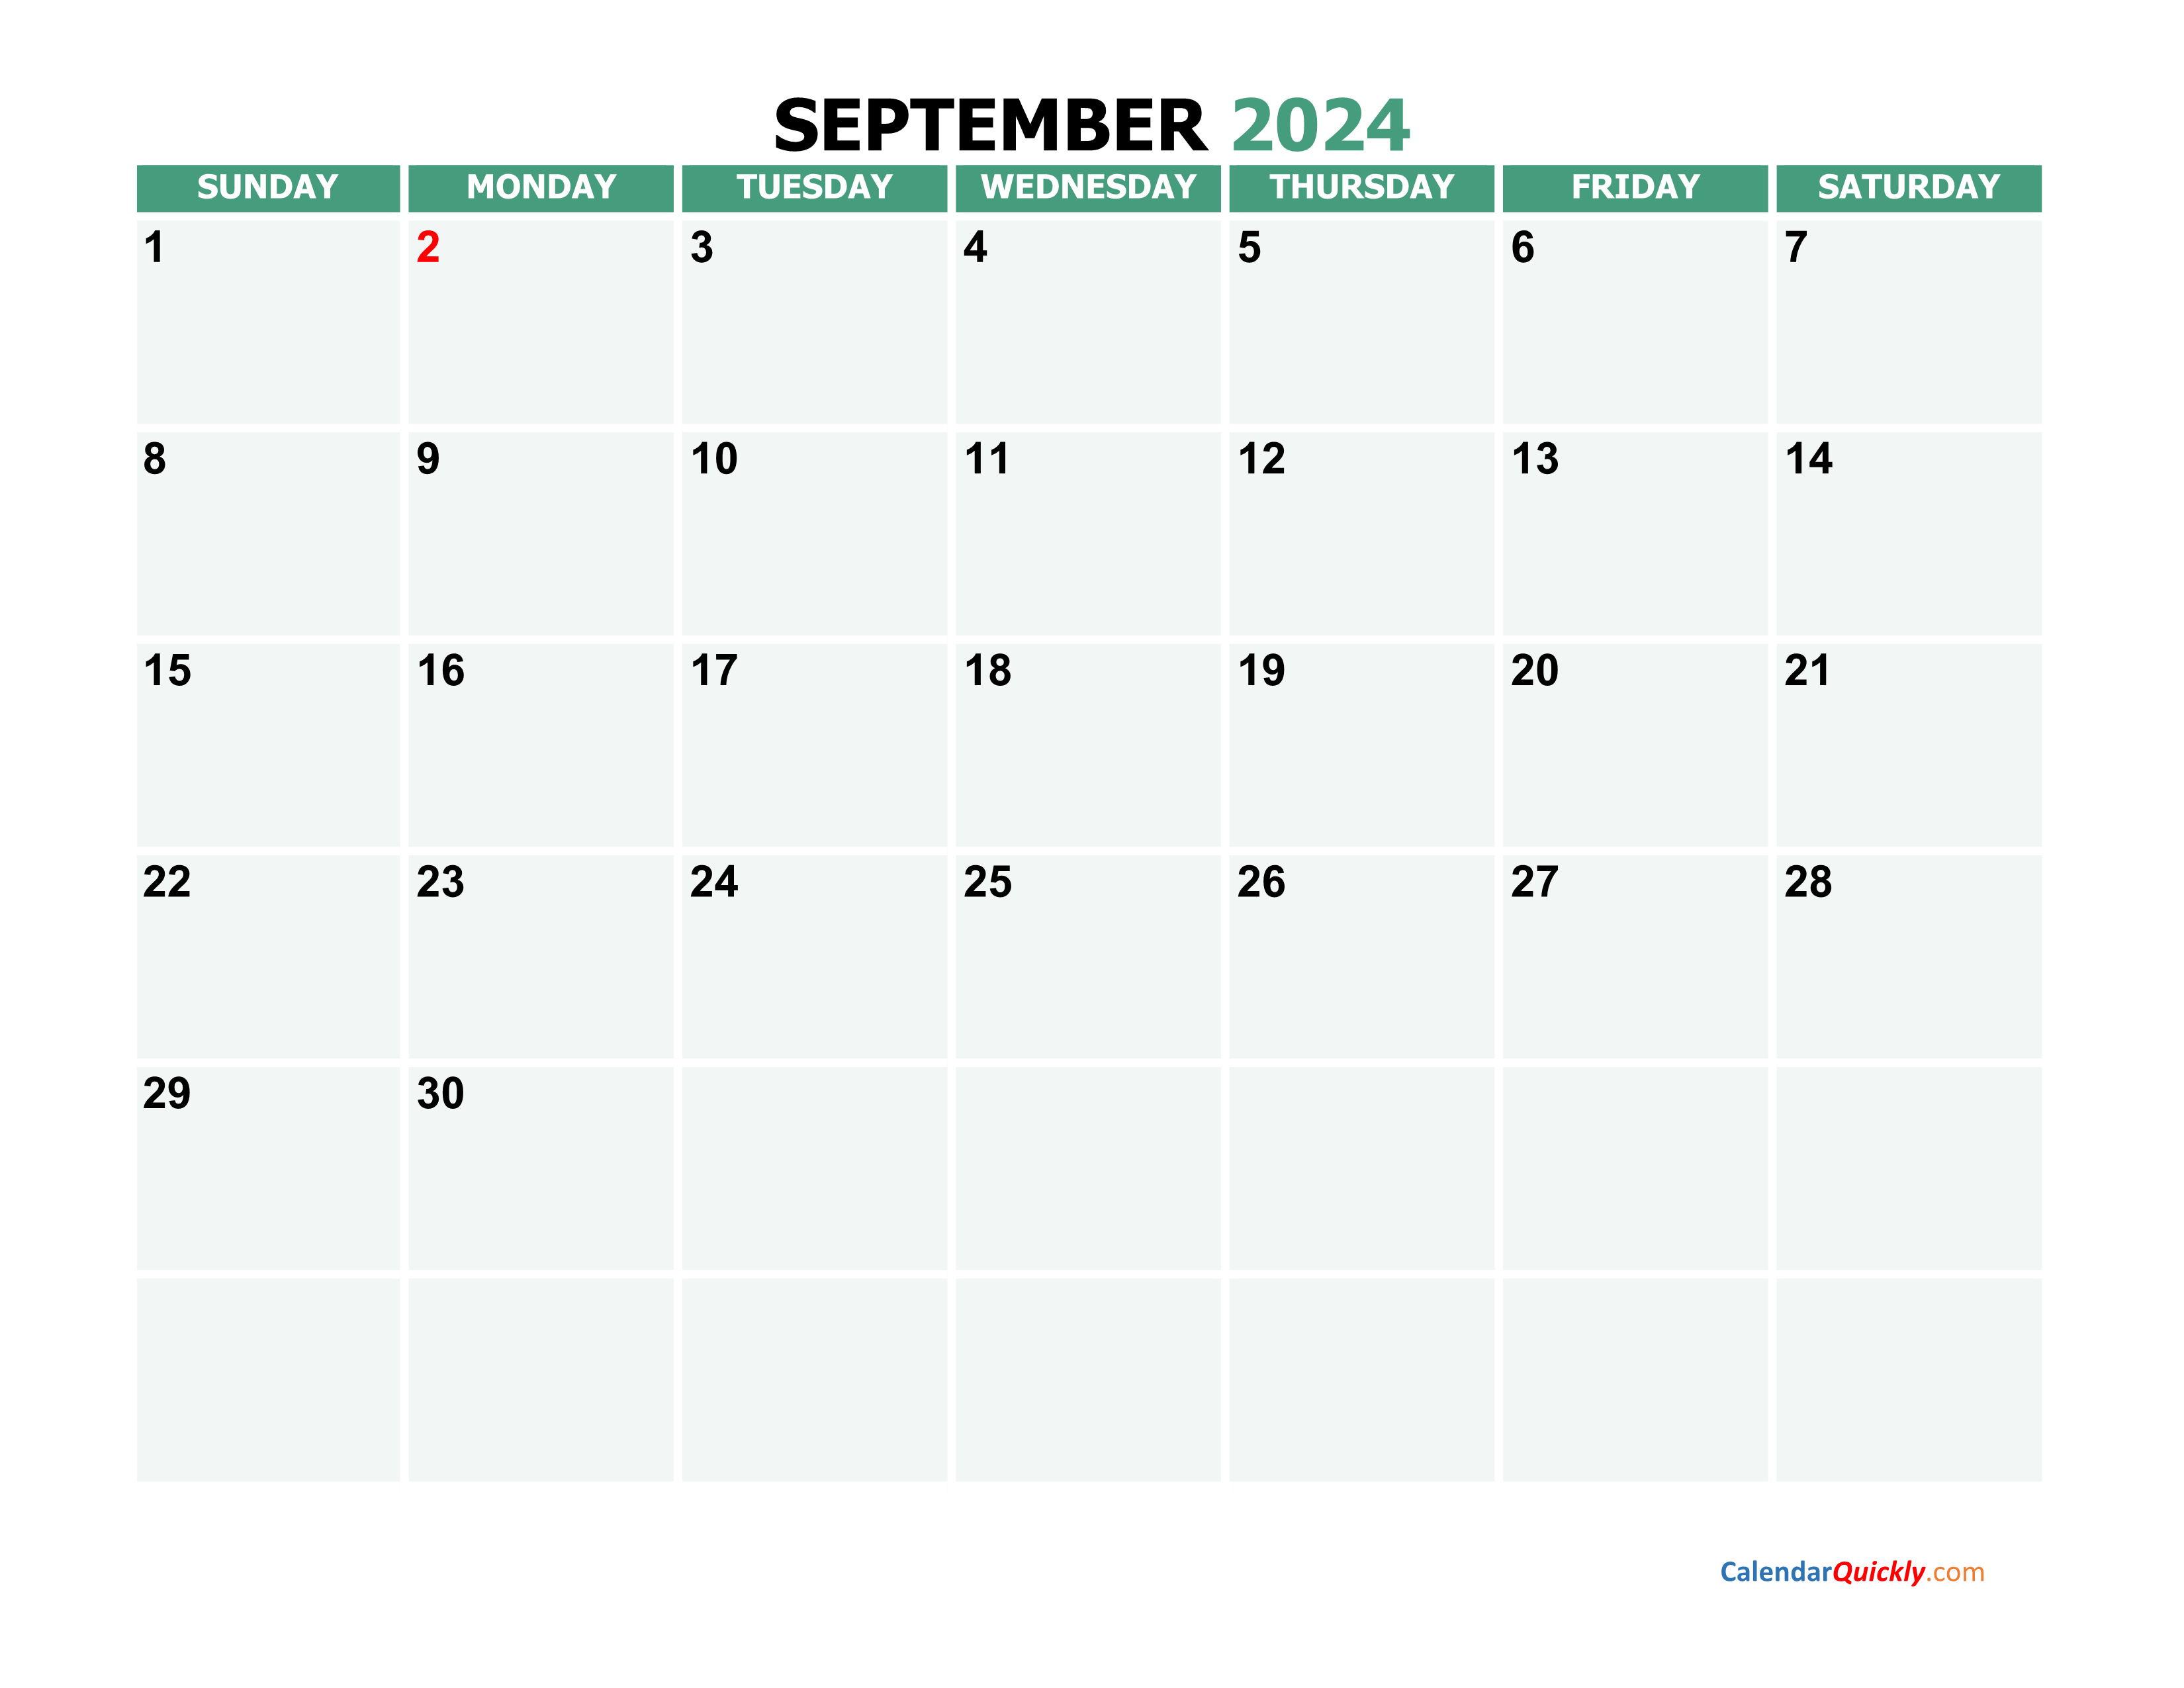 Calendar September 2024 Printable Free Calendar 2024 All Holidays - Free Printable 2024 Year Planner September 2024 Calendar